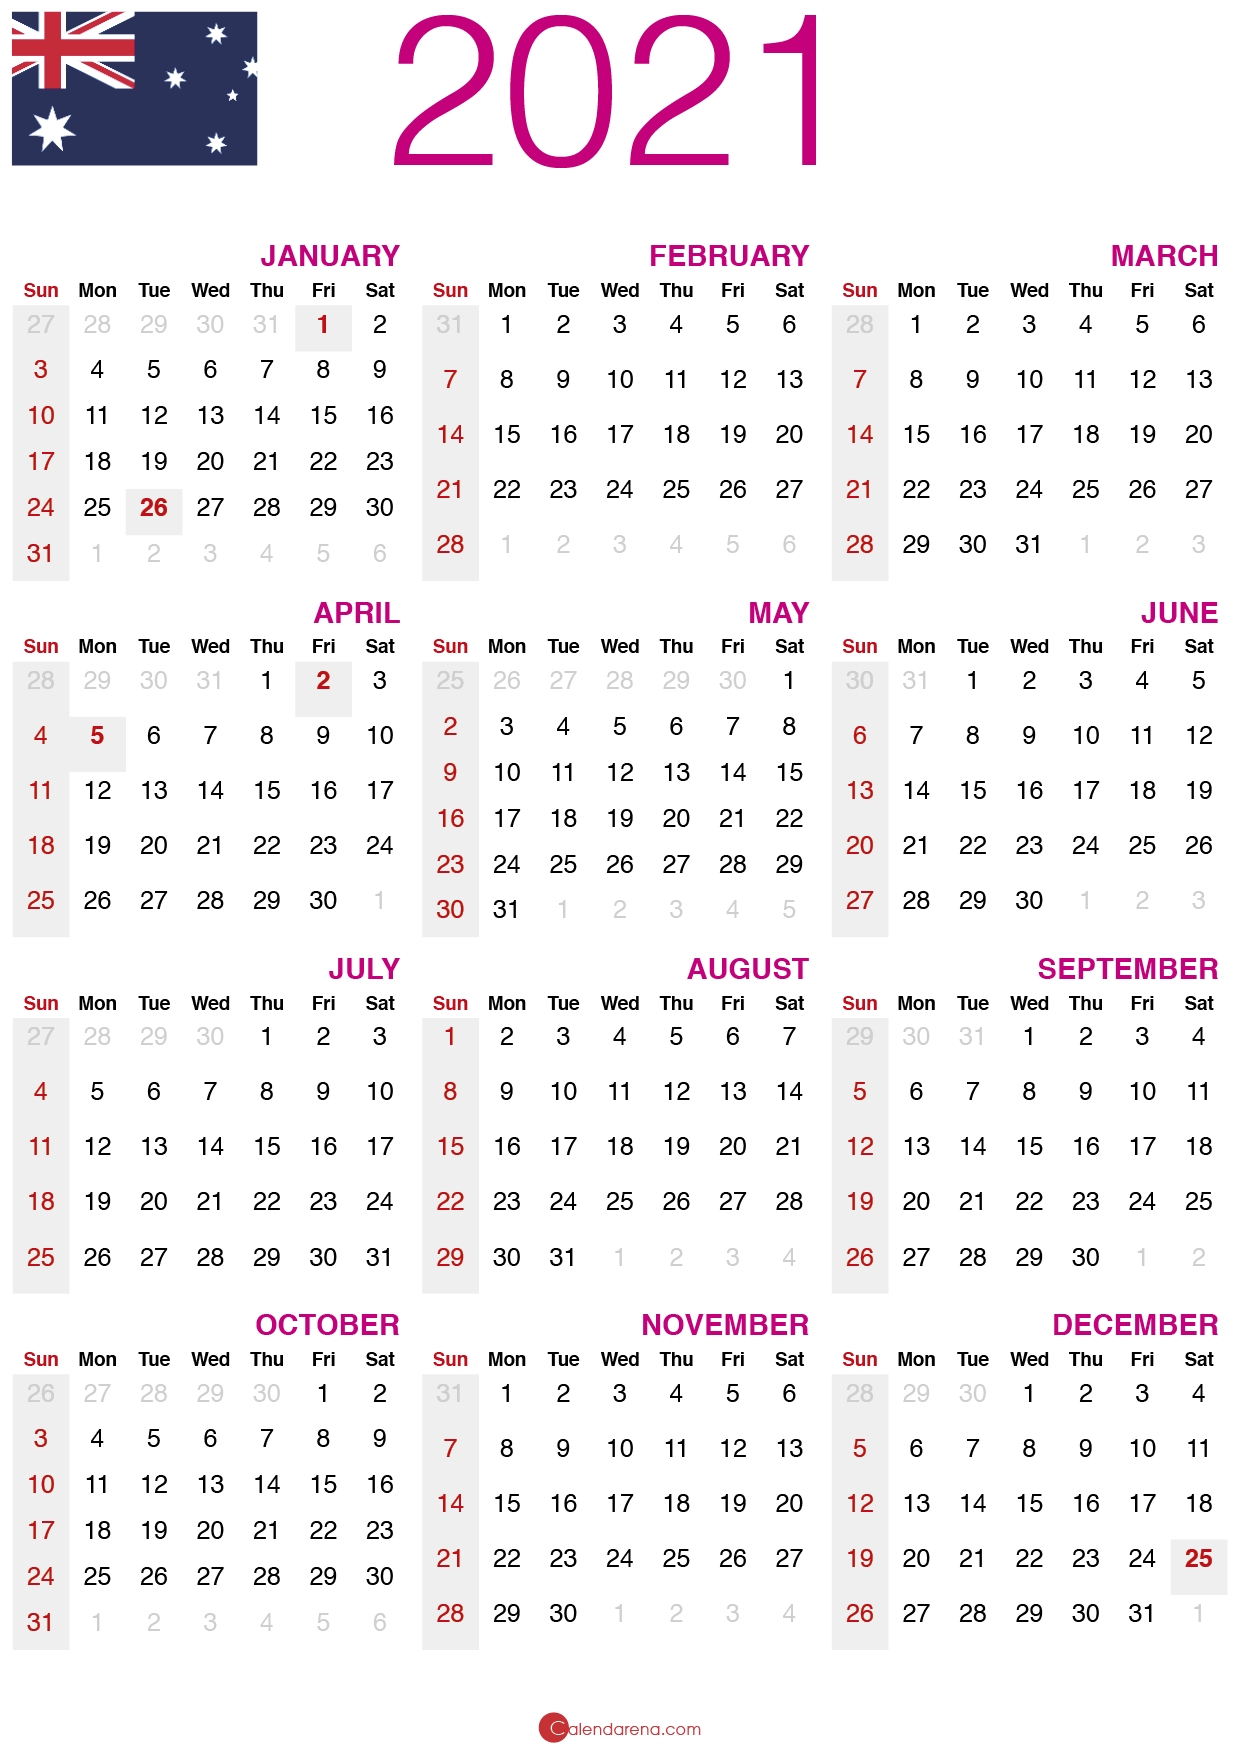 Download Free 2021 Calendar Australia ?? March April May June 2021 Calendar